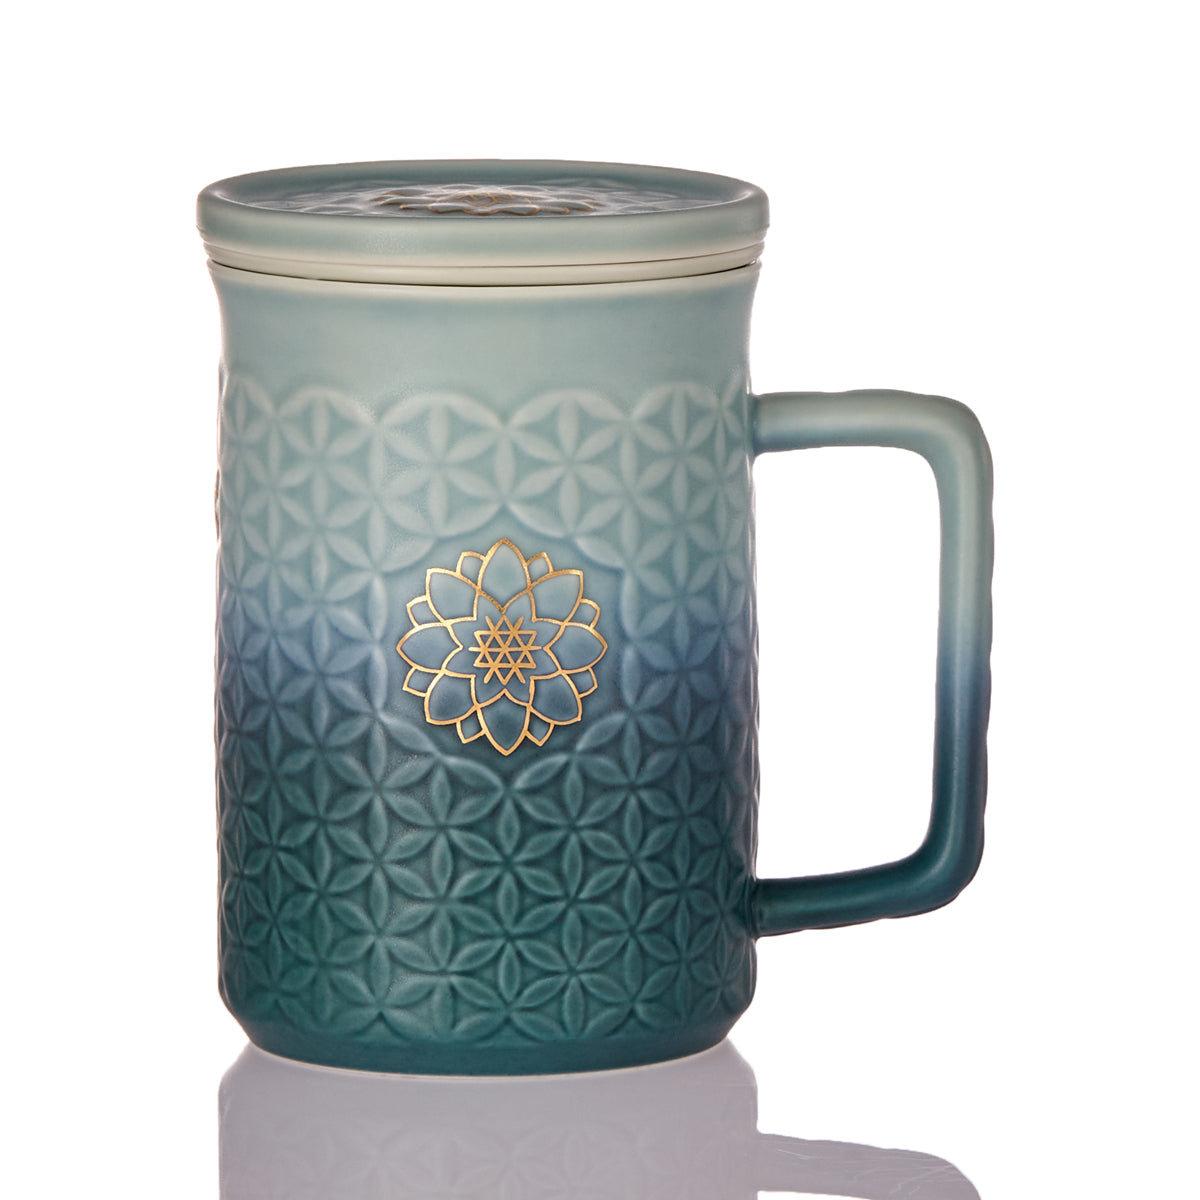 Flower of Life 3-in-1 Tea Mug with Infuser, Ceramics 15.5 oz-0